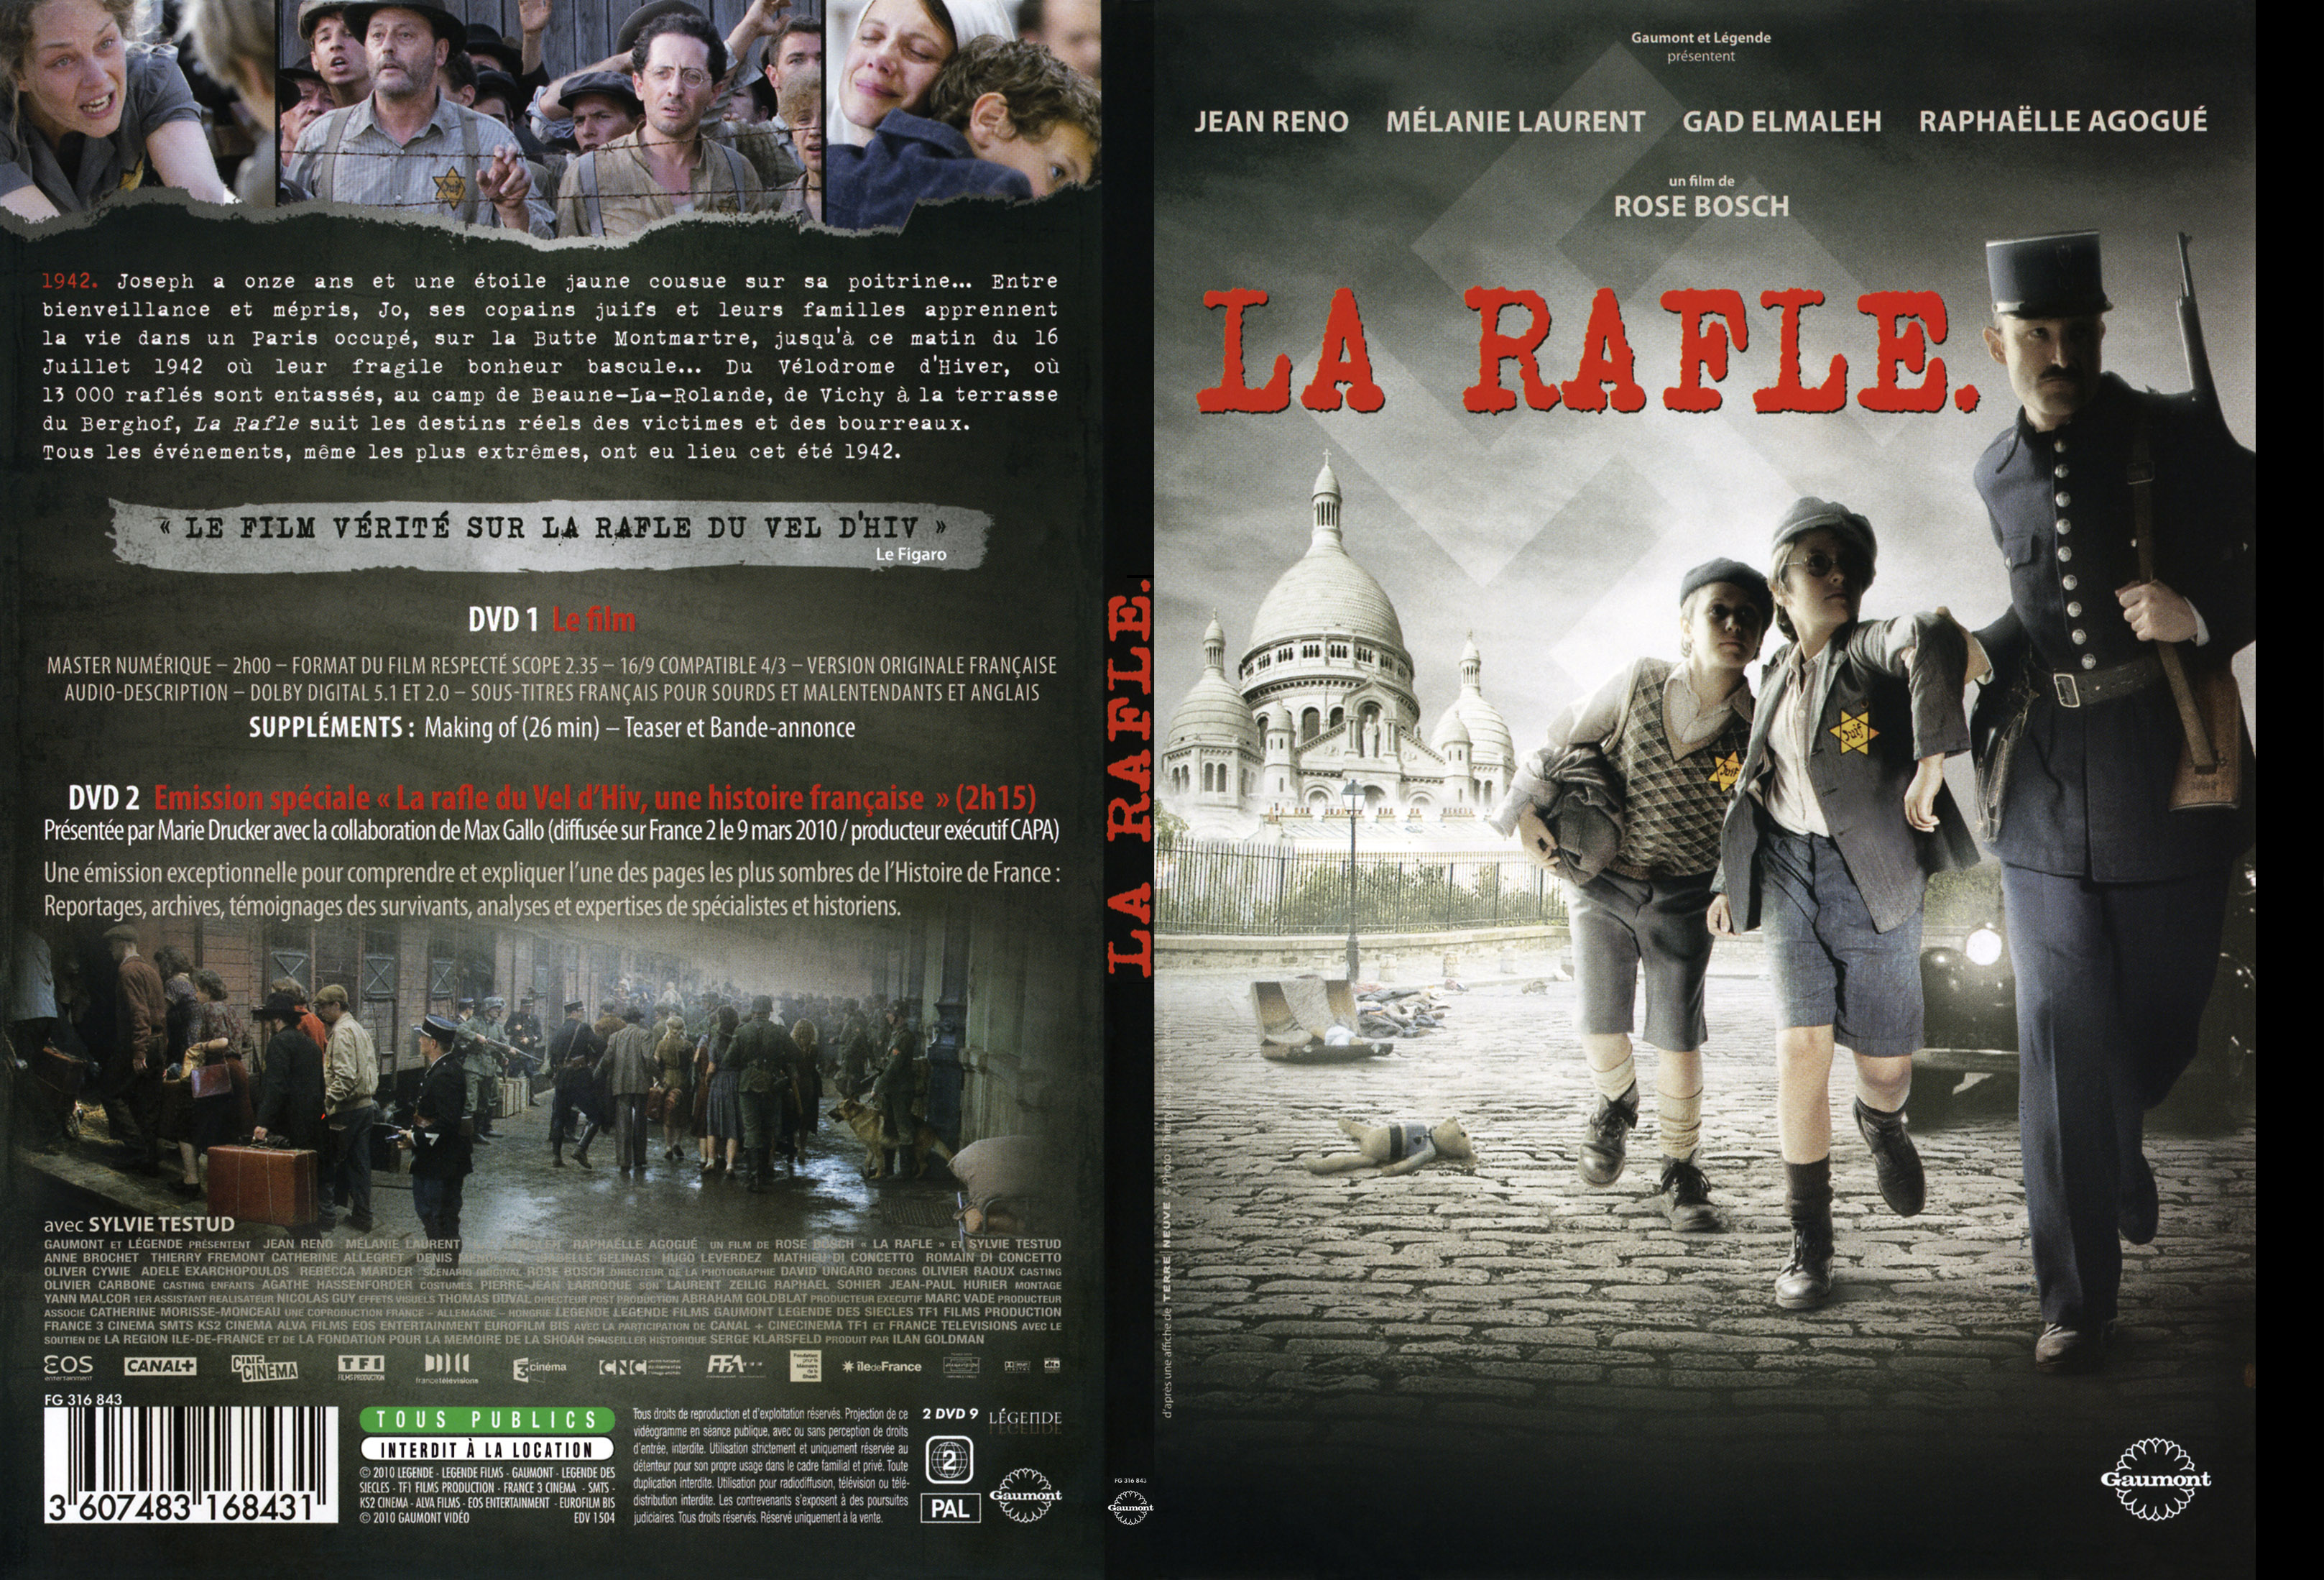 Jaquette DVD La rafle - SLIM